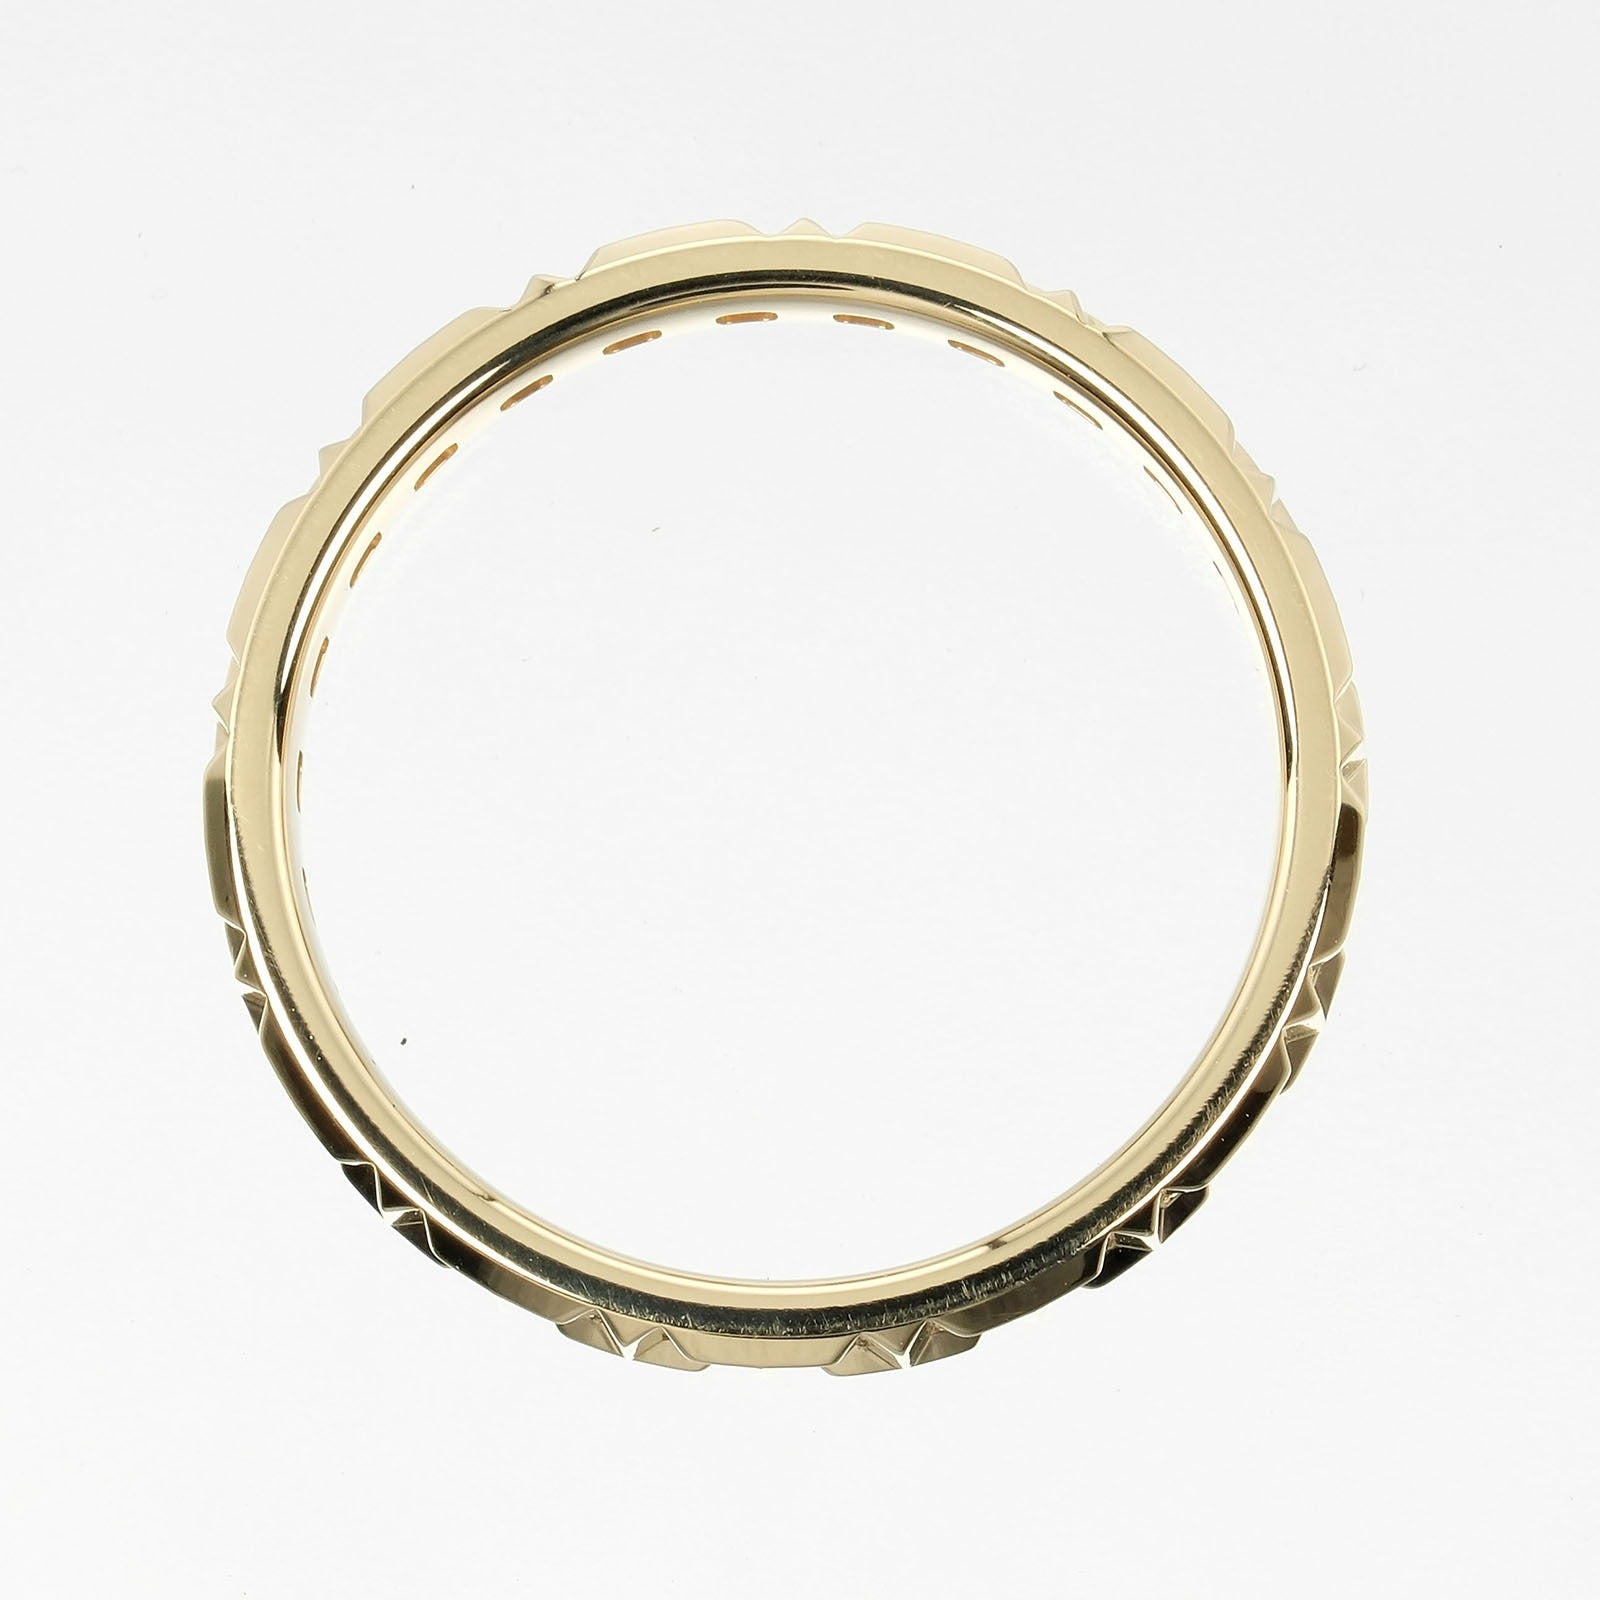 Tiffany Tiffany & Co. T Touro 16 Ring Ring 3.5mm K18 YG Yellow G  3.9g